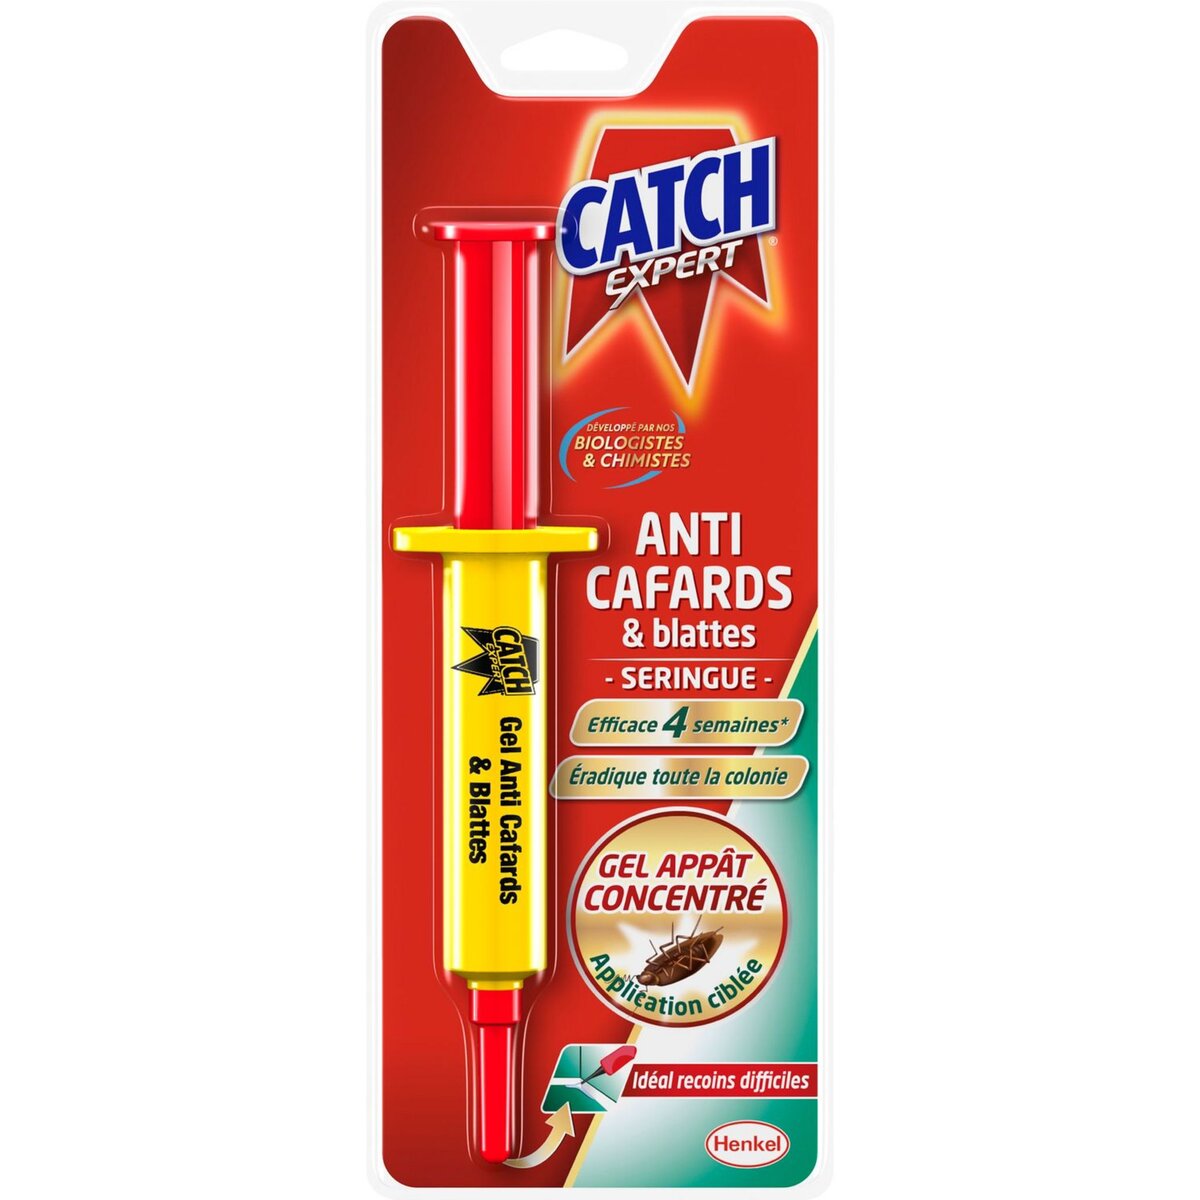 CATCH Seringue anti-cafards & blattes 1 seringue